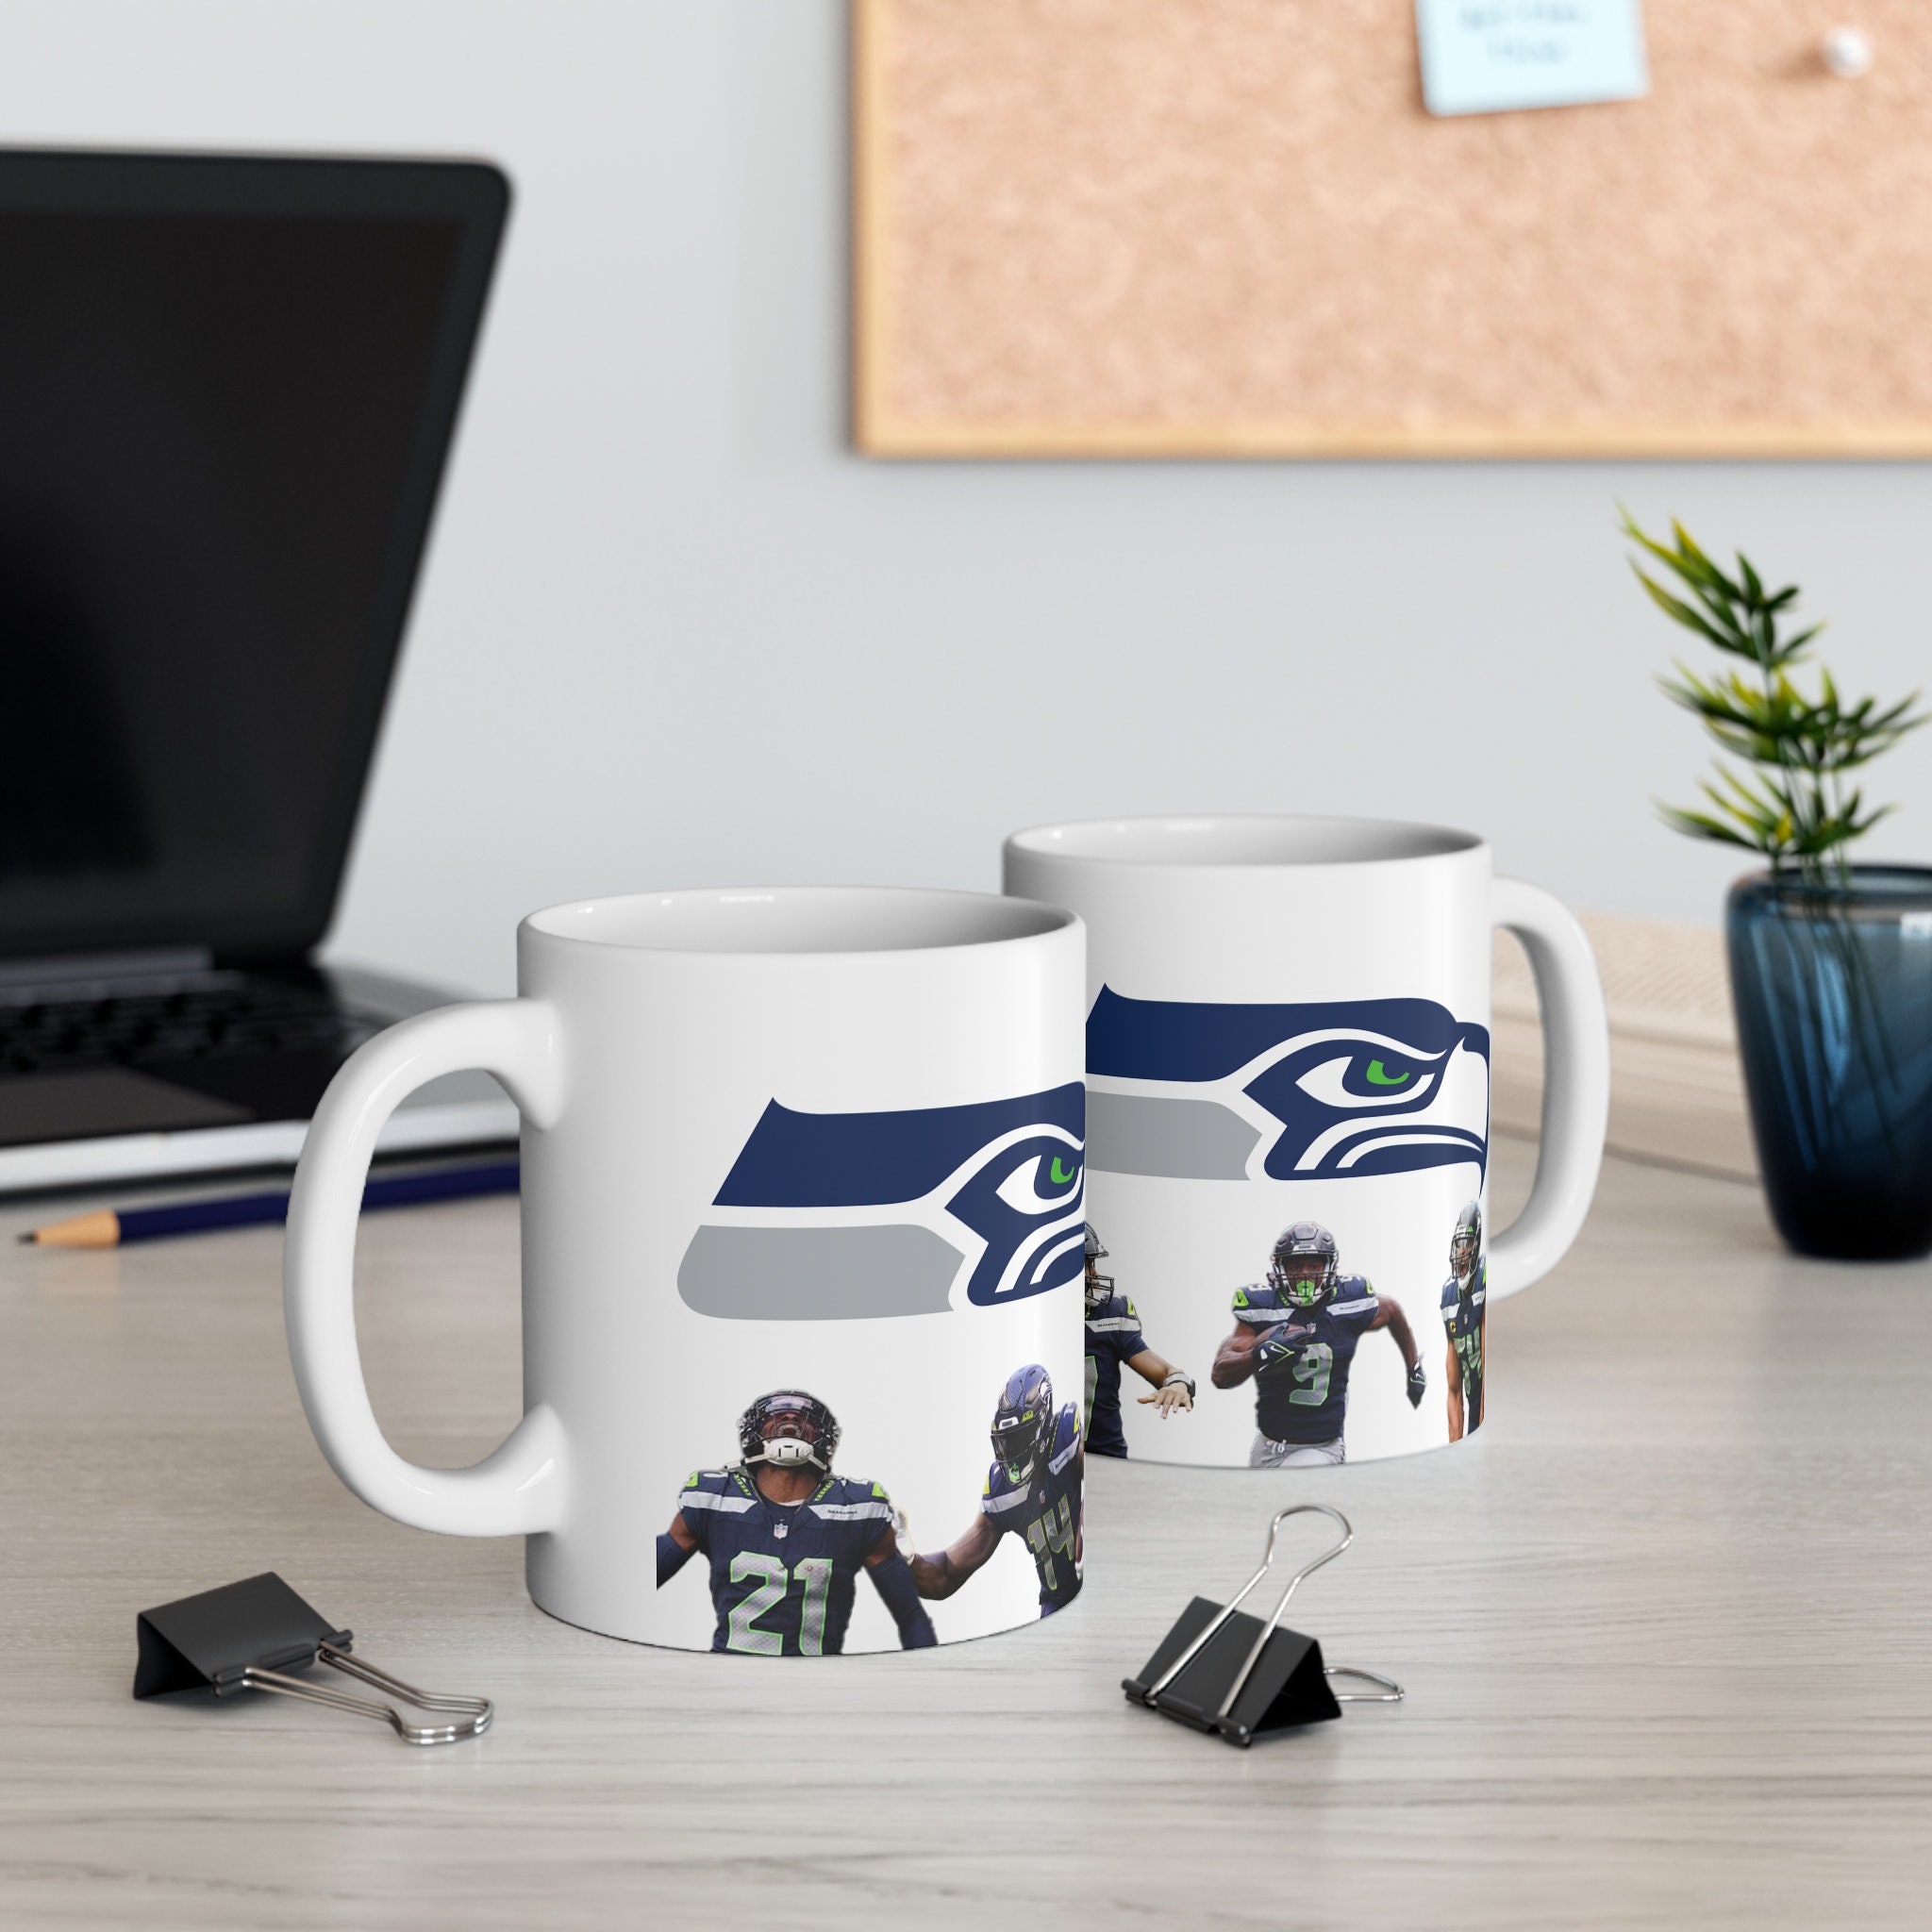 Favorite NFL Team Mugs, Sport Lovers Mugs